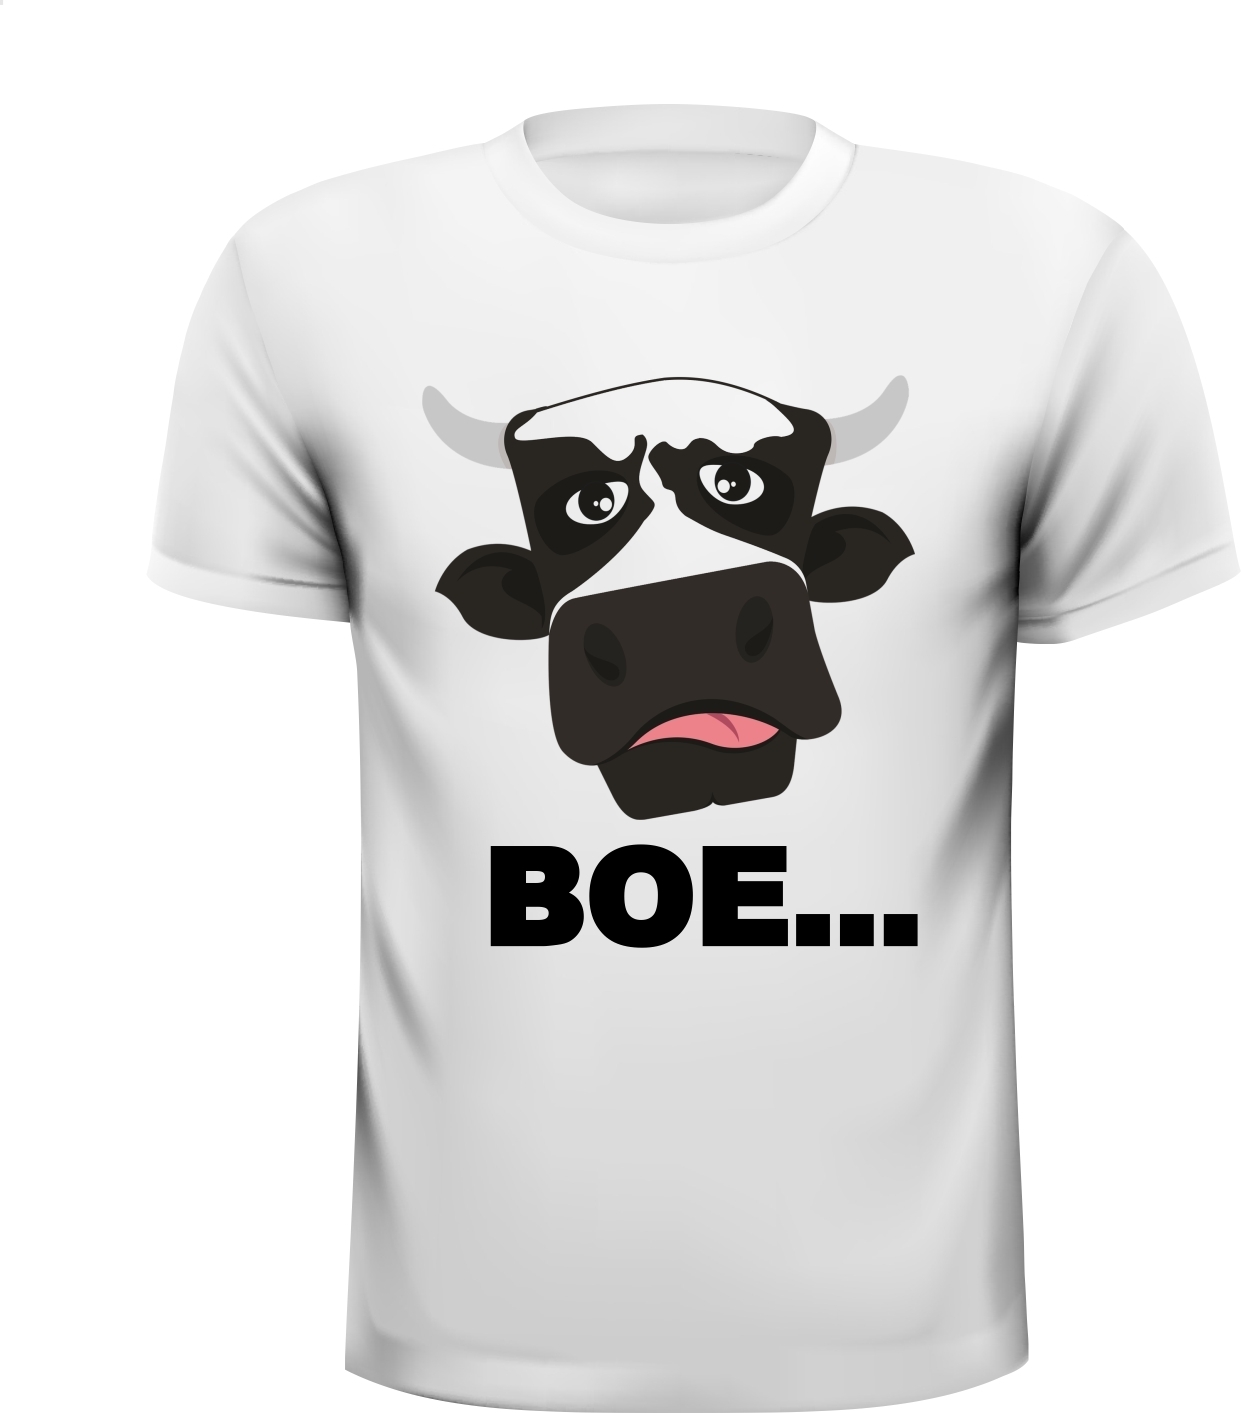 Boe koeien loeien koe T-shirt grappig rund stier